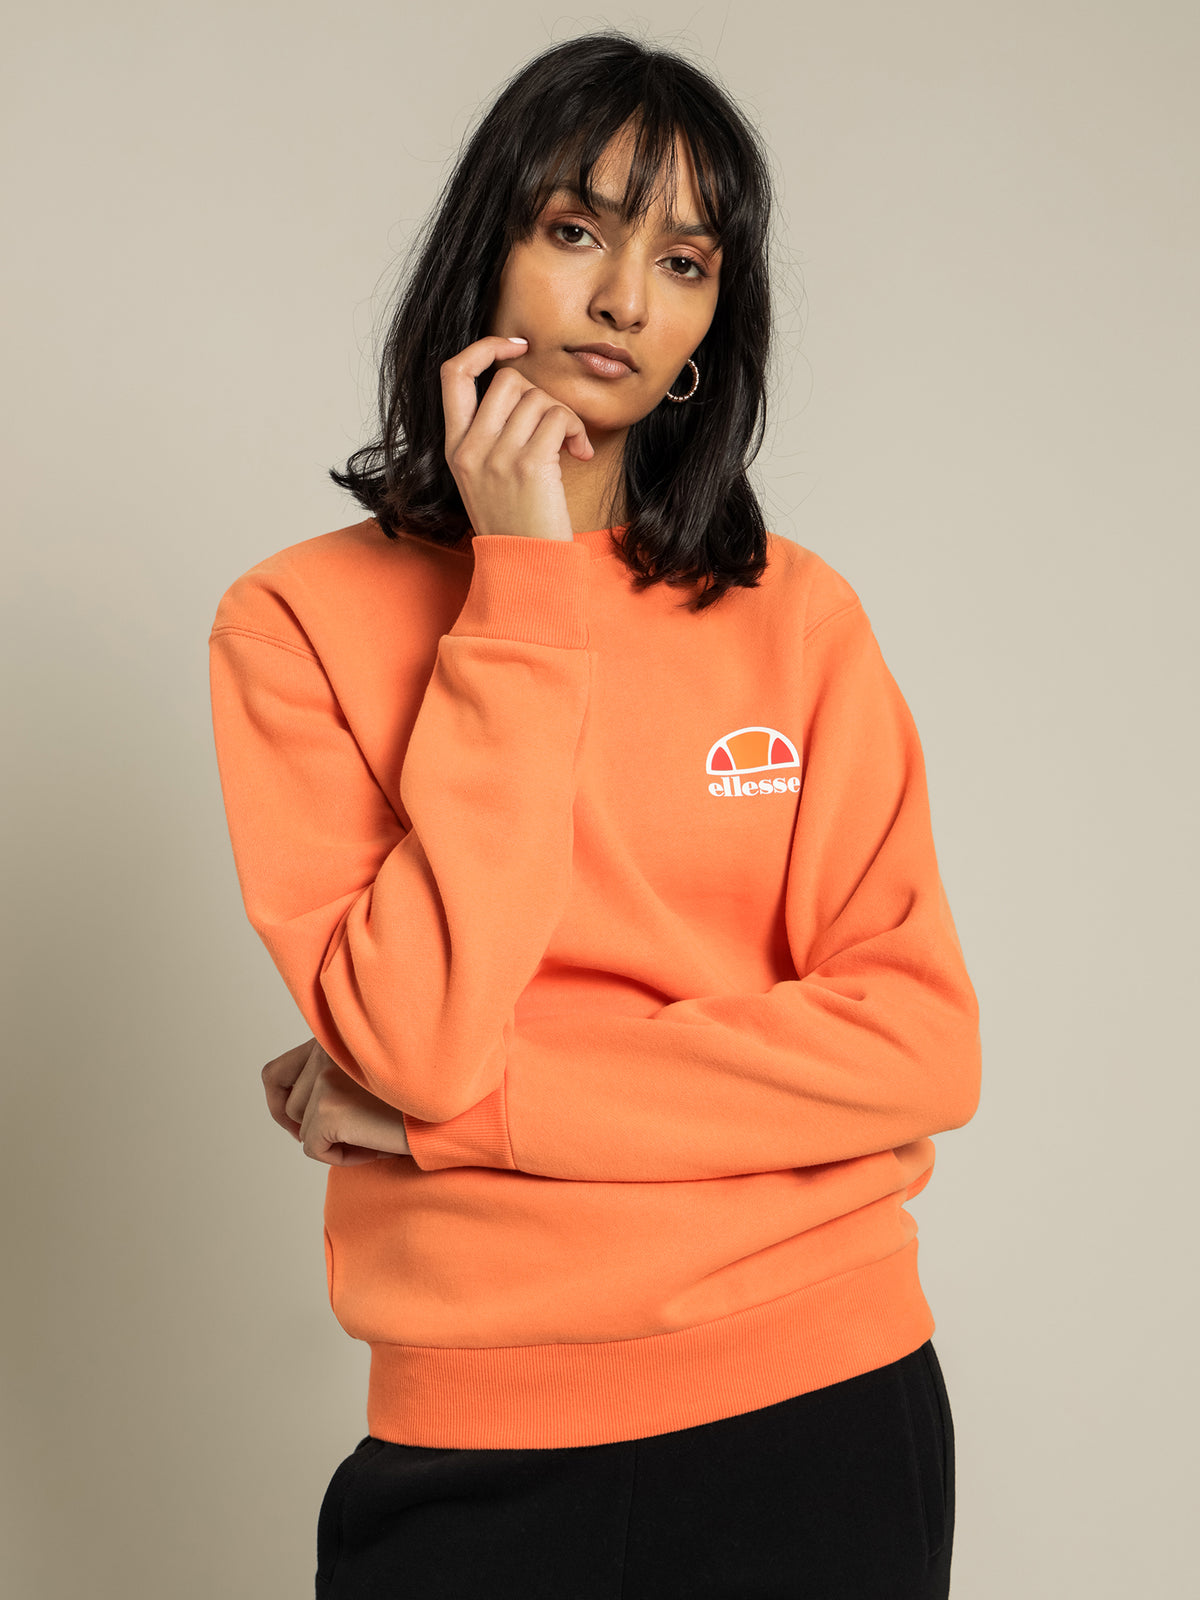 Haverford Sweatshirt in Orange